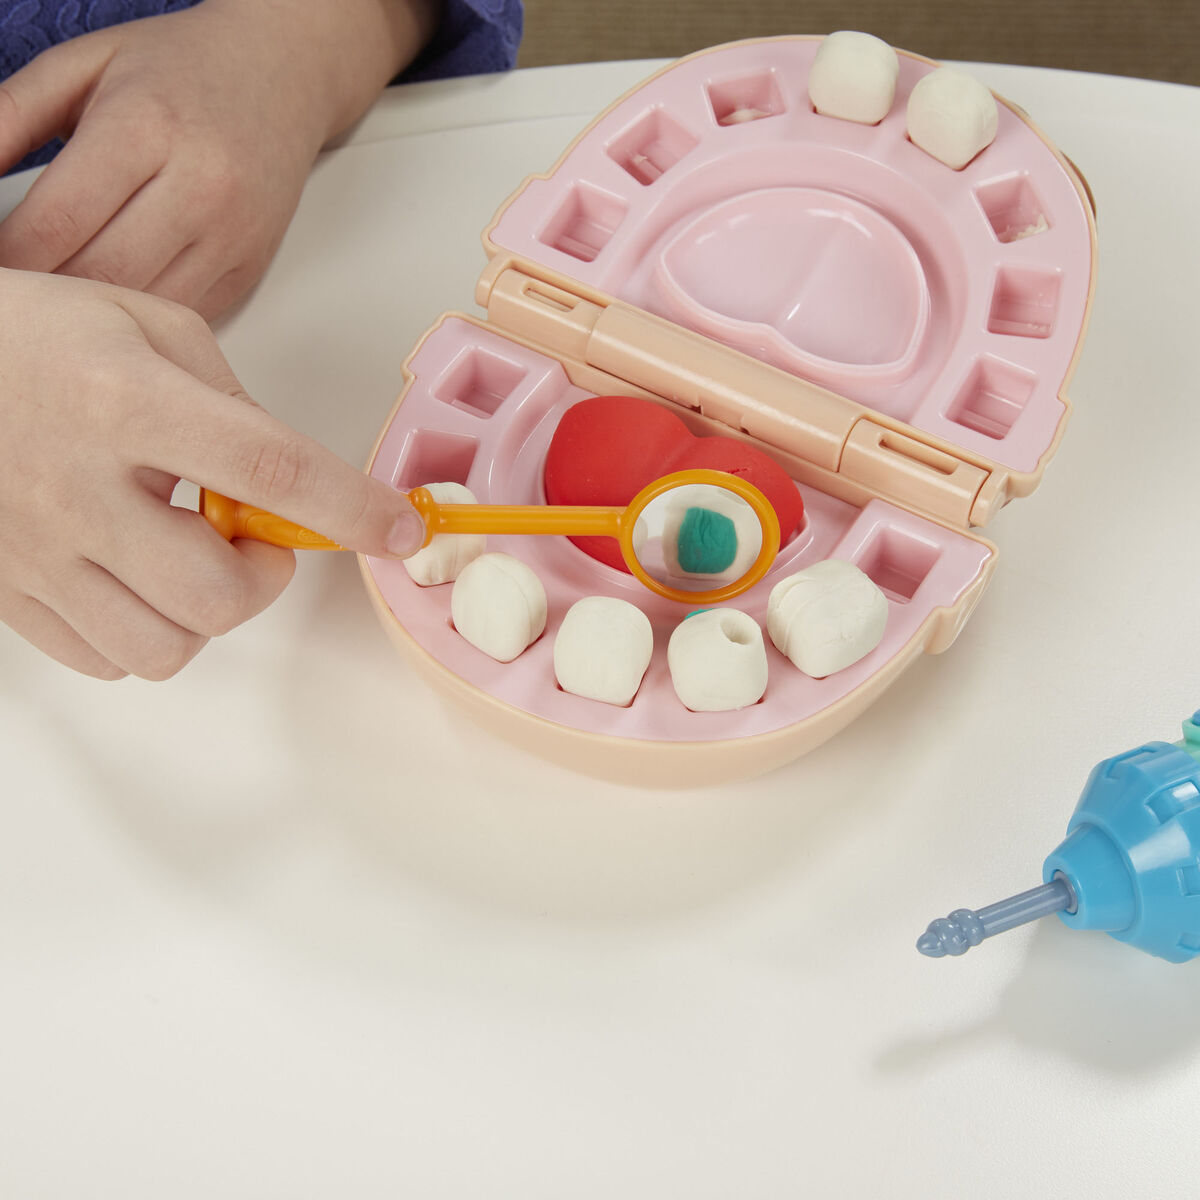 Play-Doh Dentista Bromista